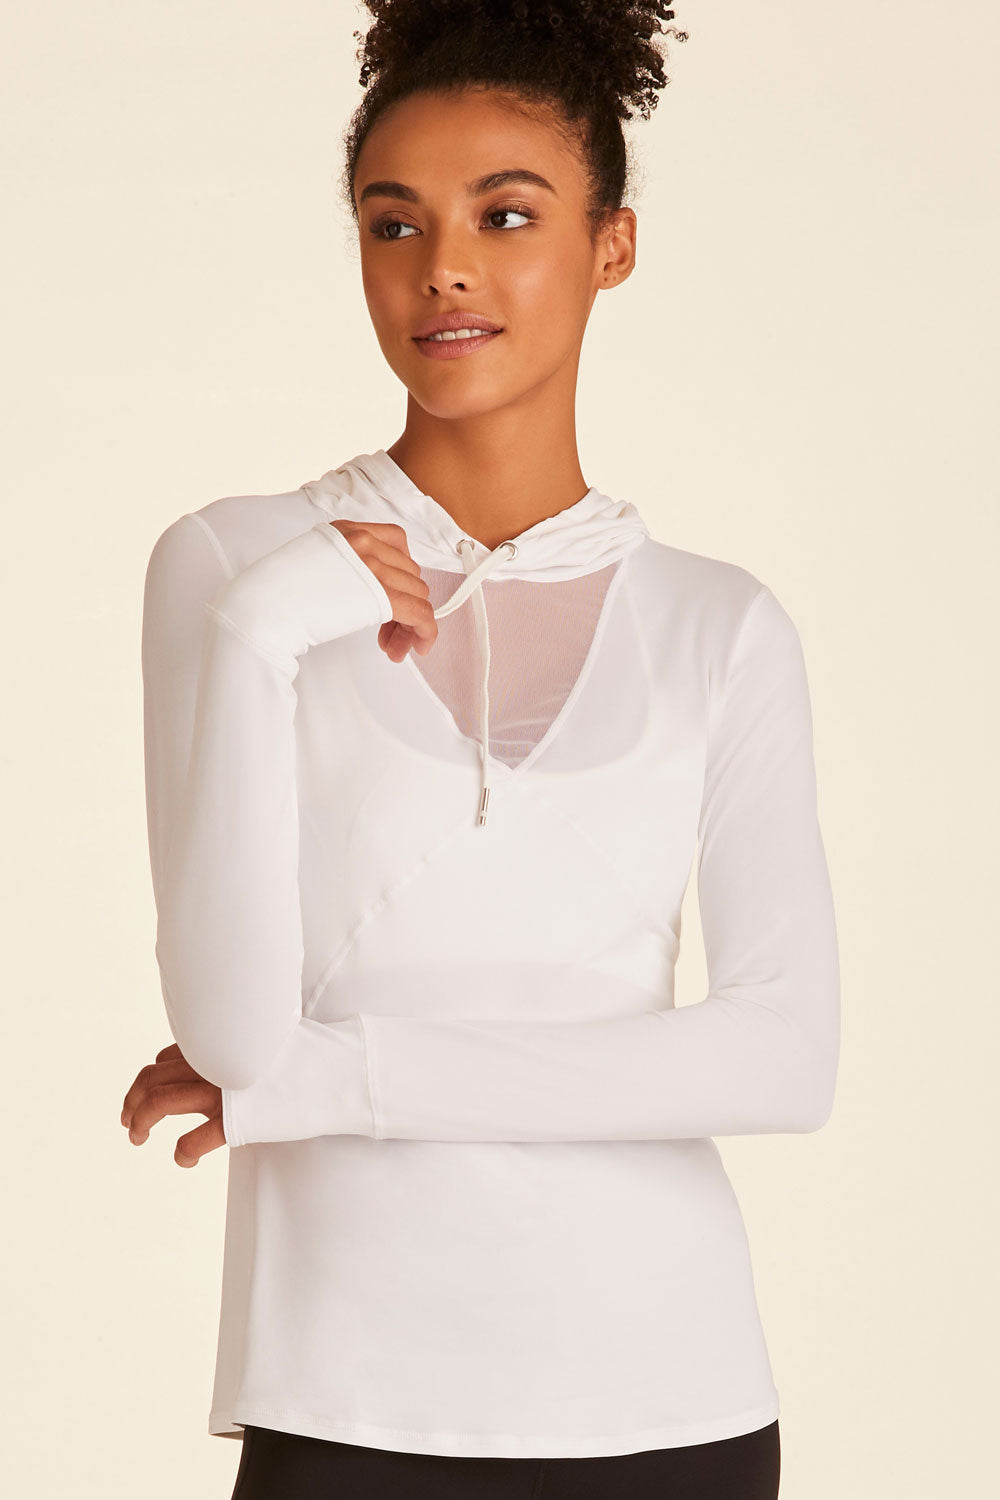 Alala flyweight hoodie for women in white